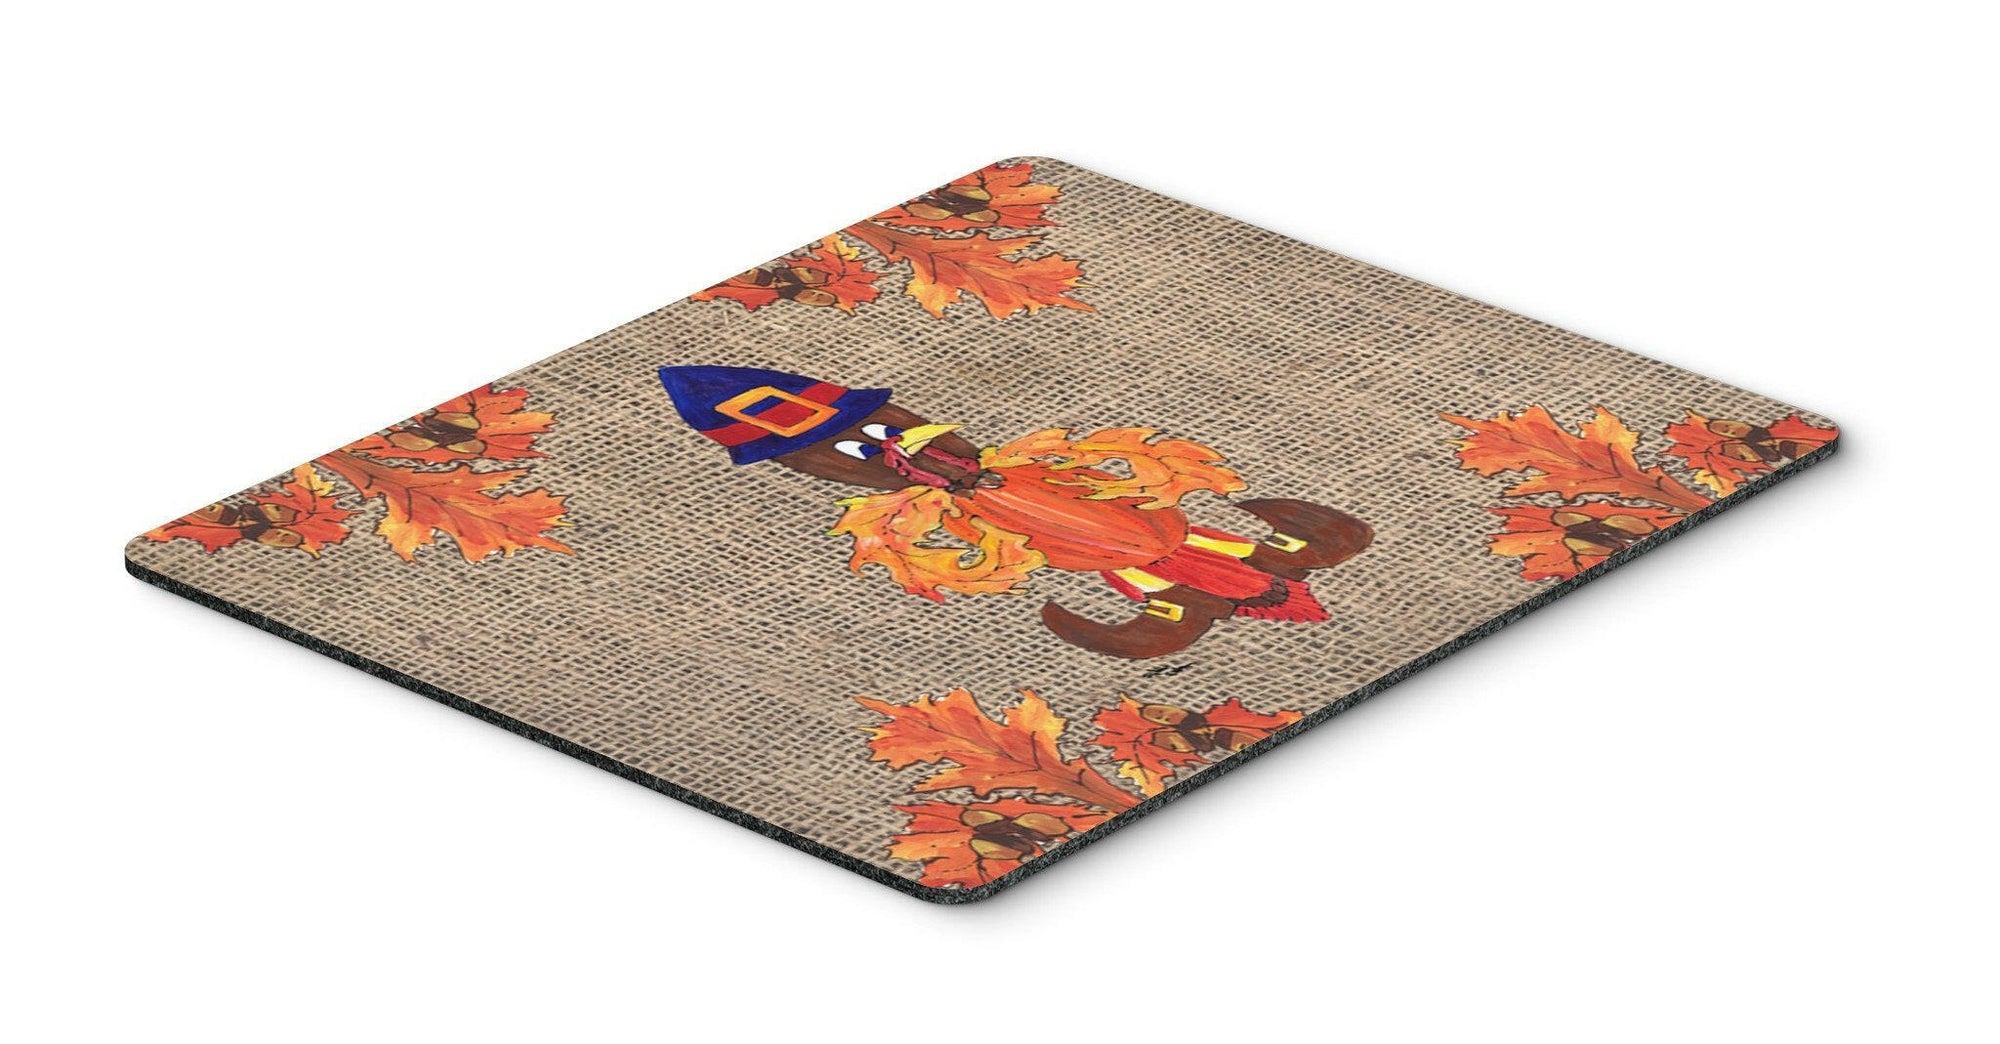 Thanksgiving Turkey Pilgrim Fleur de lis Mouse pad, hot pad, or trivet by Caroline's Treasures